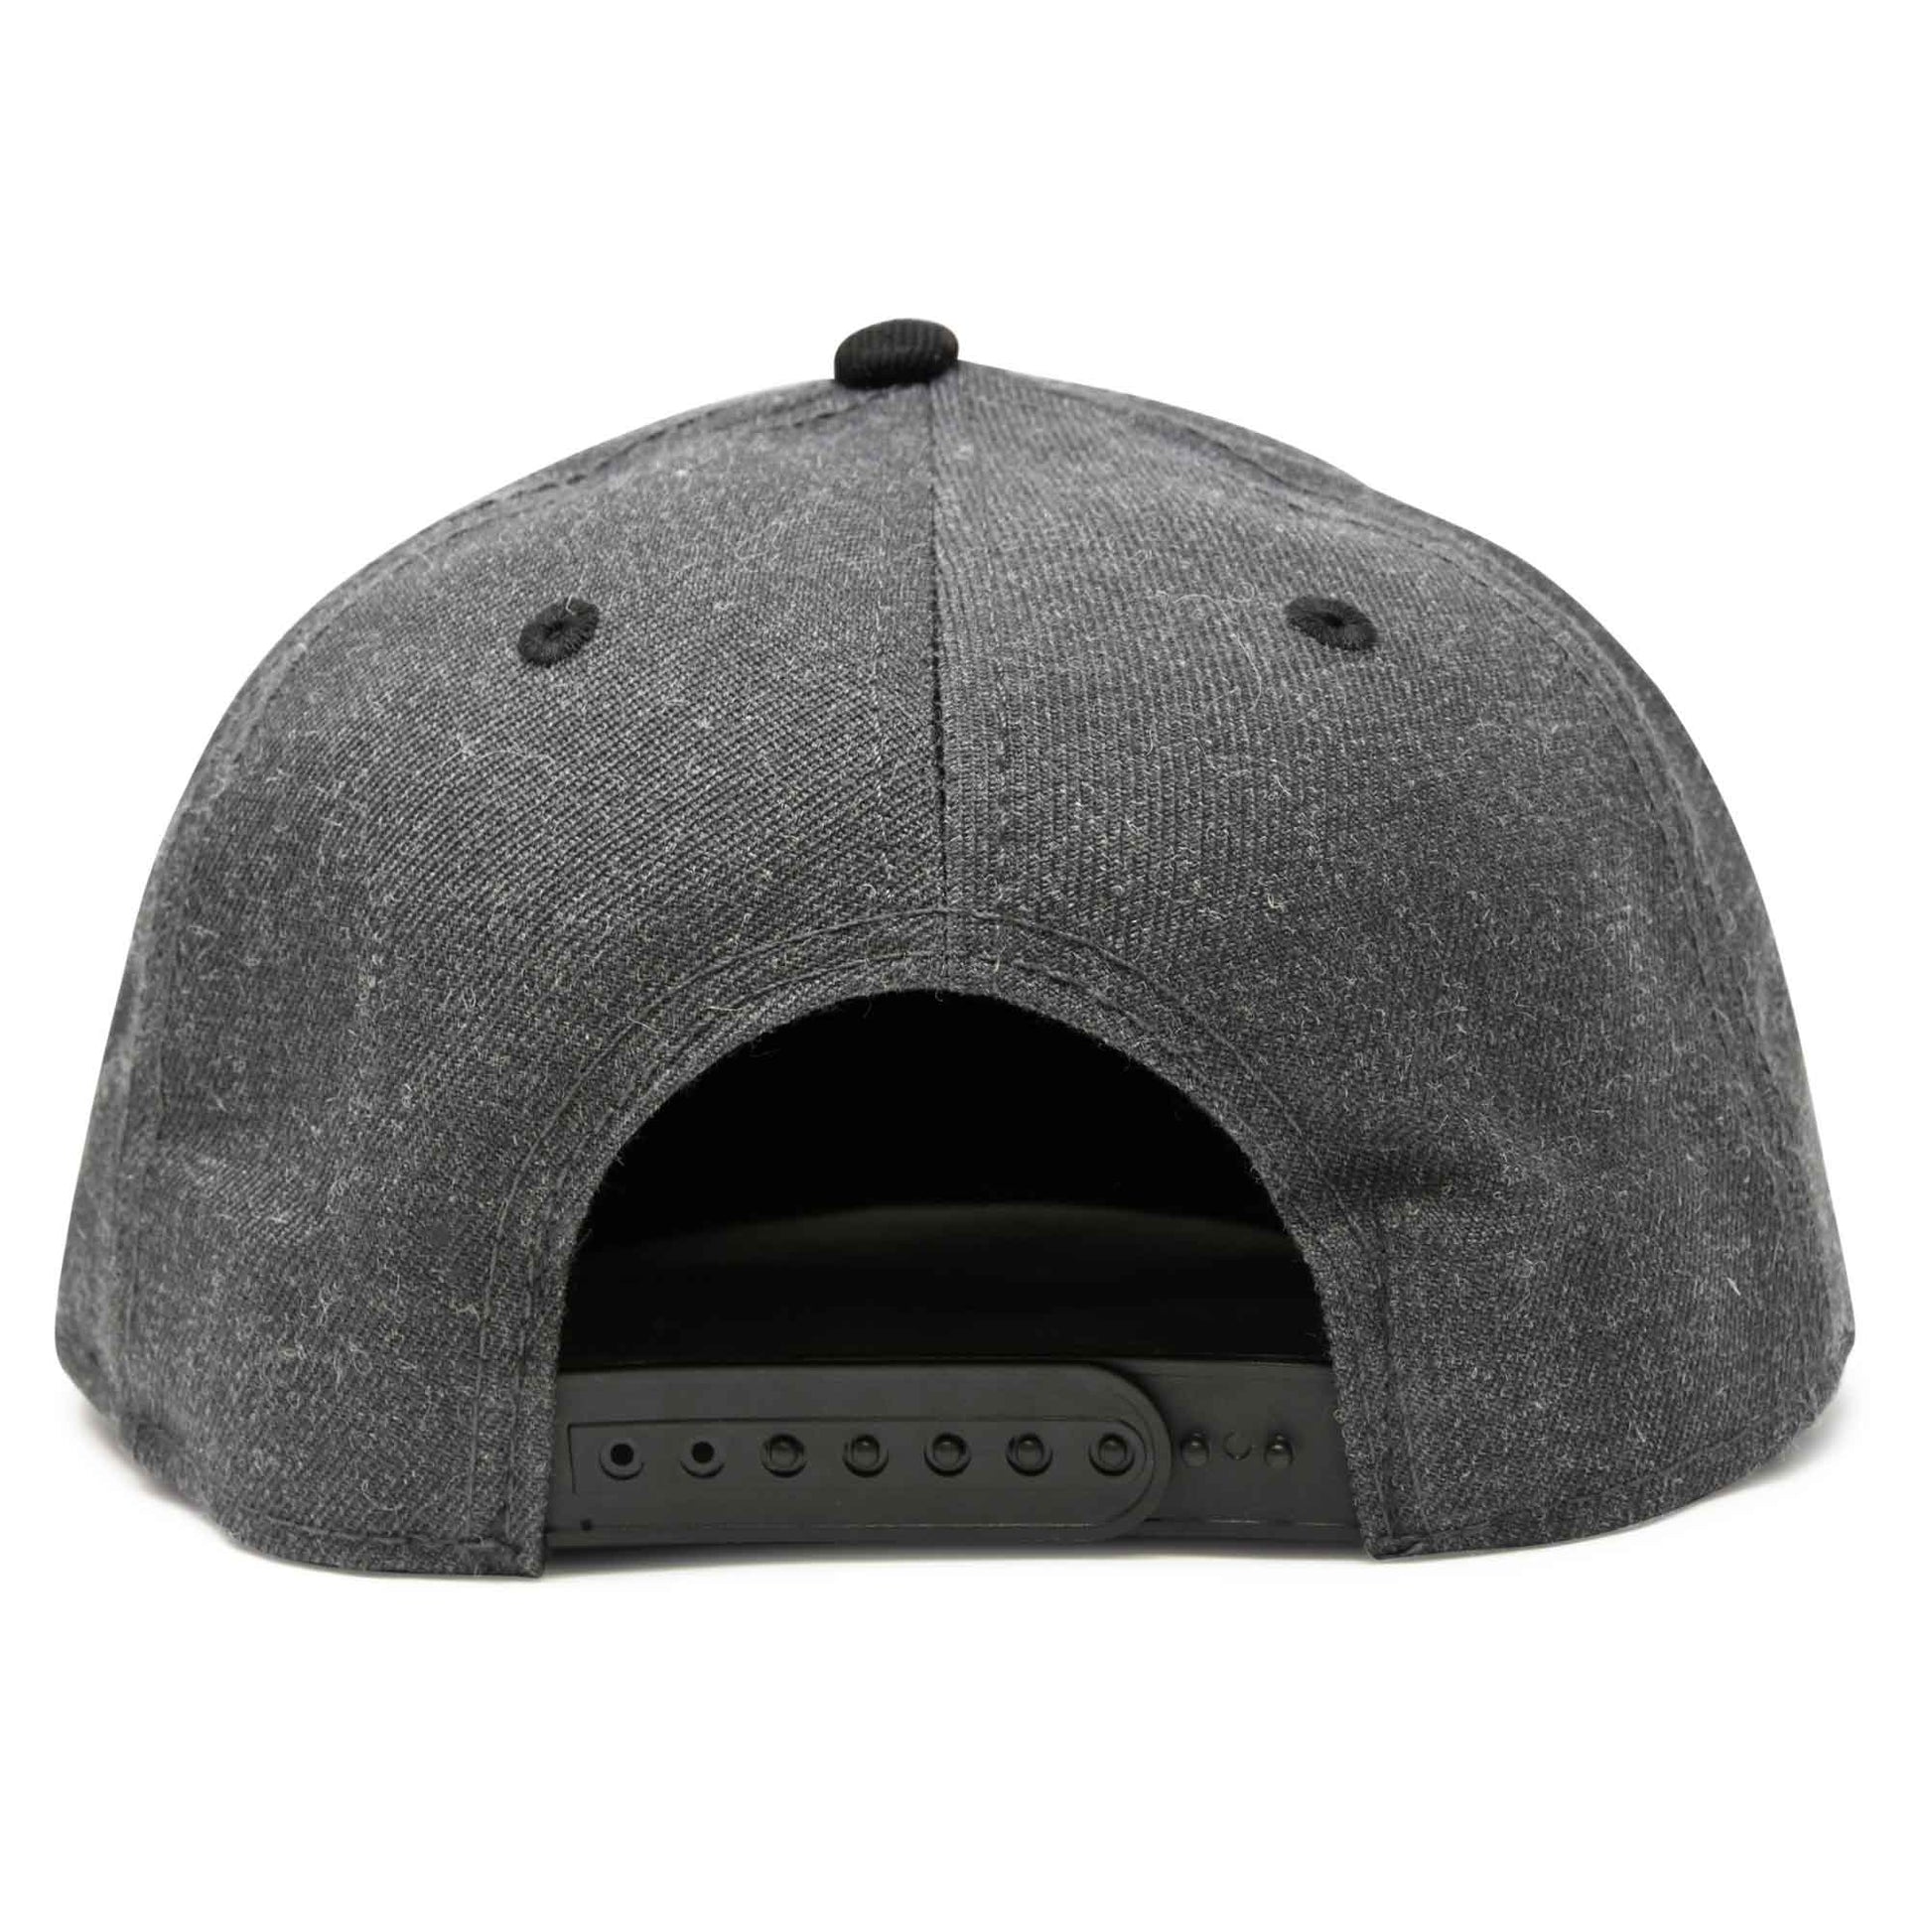 Dalix Clover Snapback Flat Bill Baseball Hat Embroidered Cap Mens in Black Light Gray